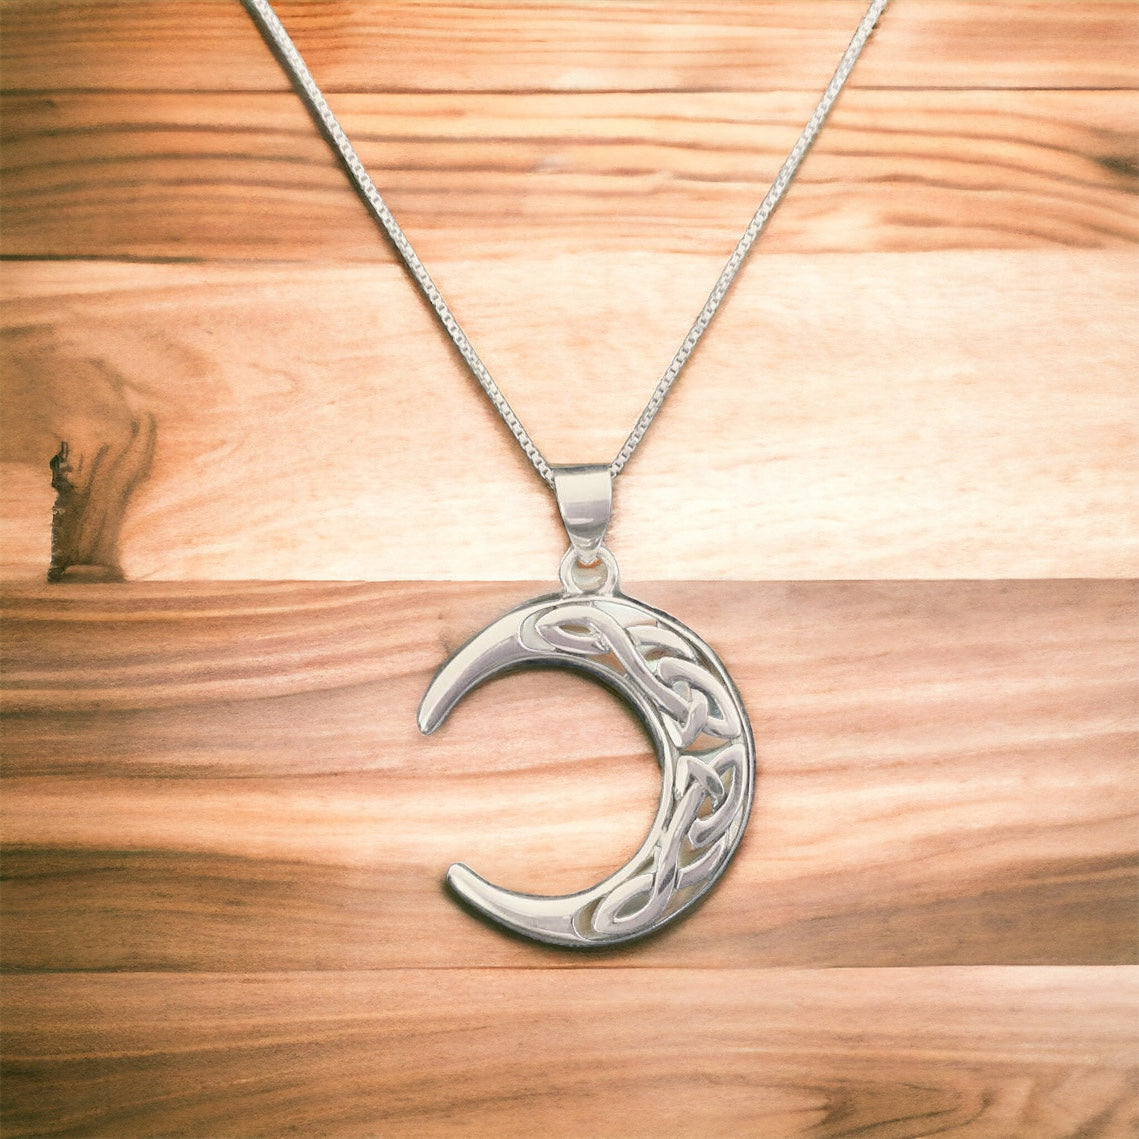 Handcast 925 Sterling Silver Irish Celtic Crescent Moon Pendant + Free Chain Necklace